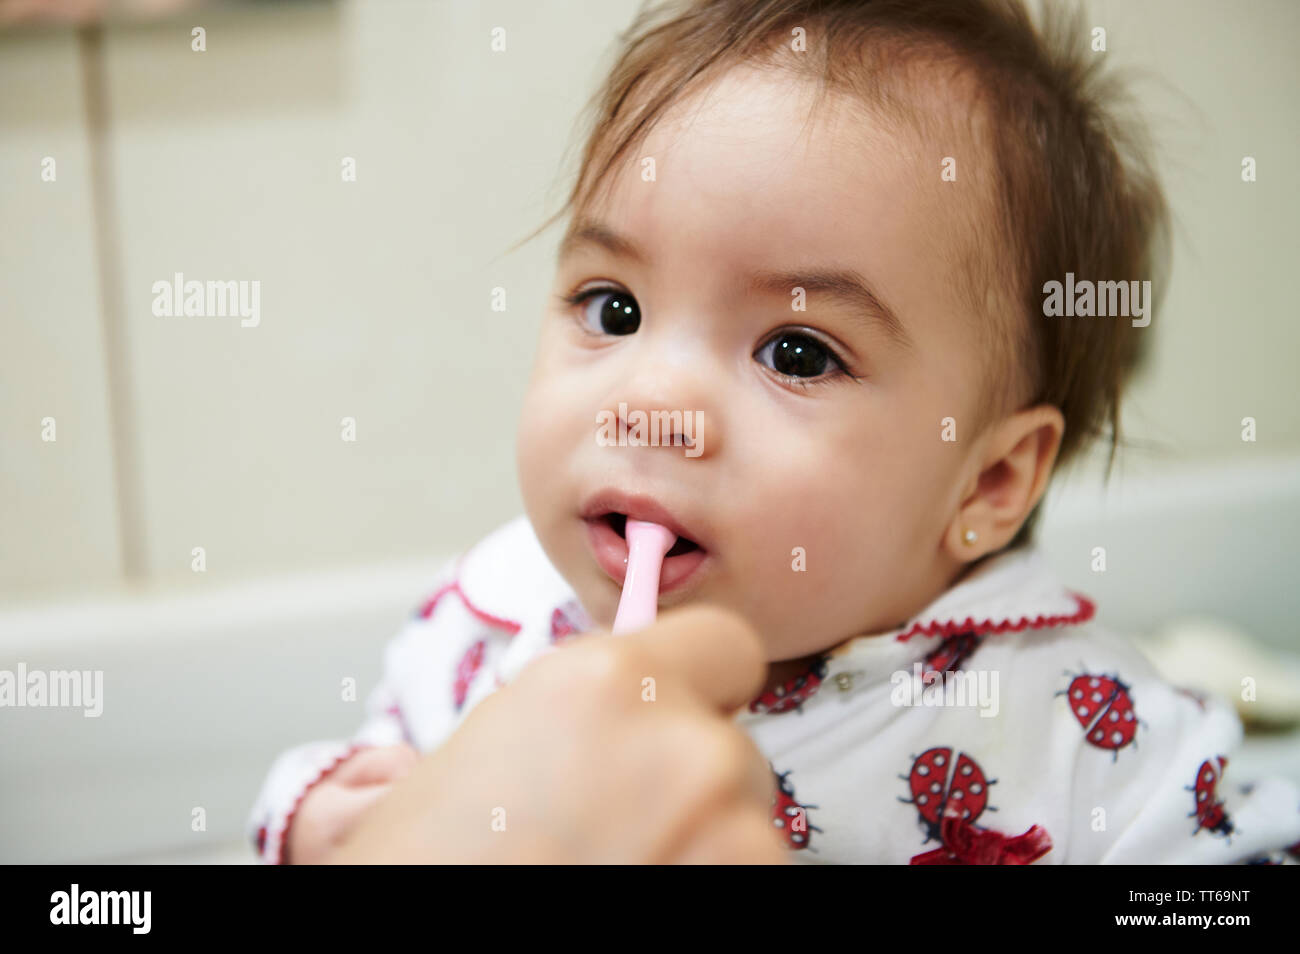 Baby brushing teeth before go sleep. Portrait of little kid with toothbrush Stock Photo